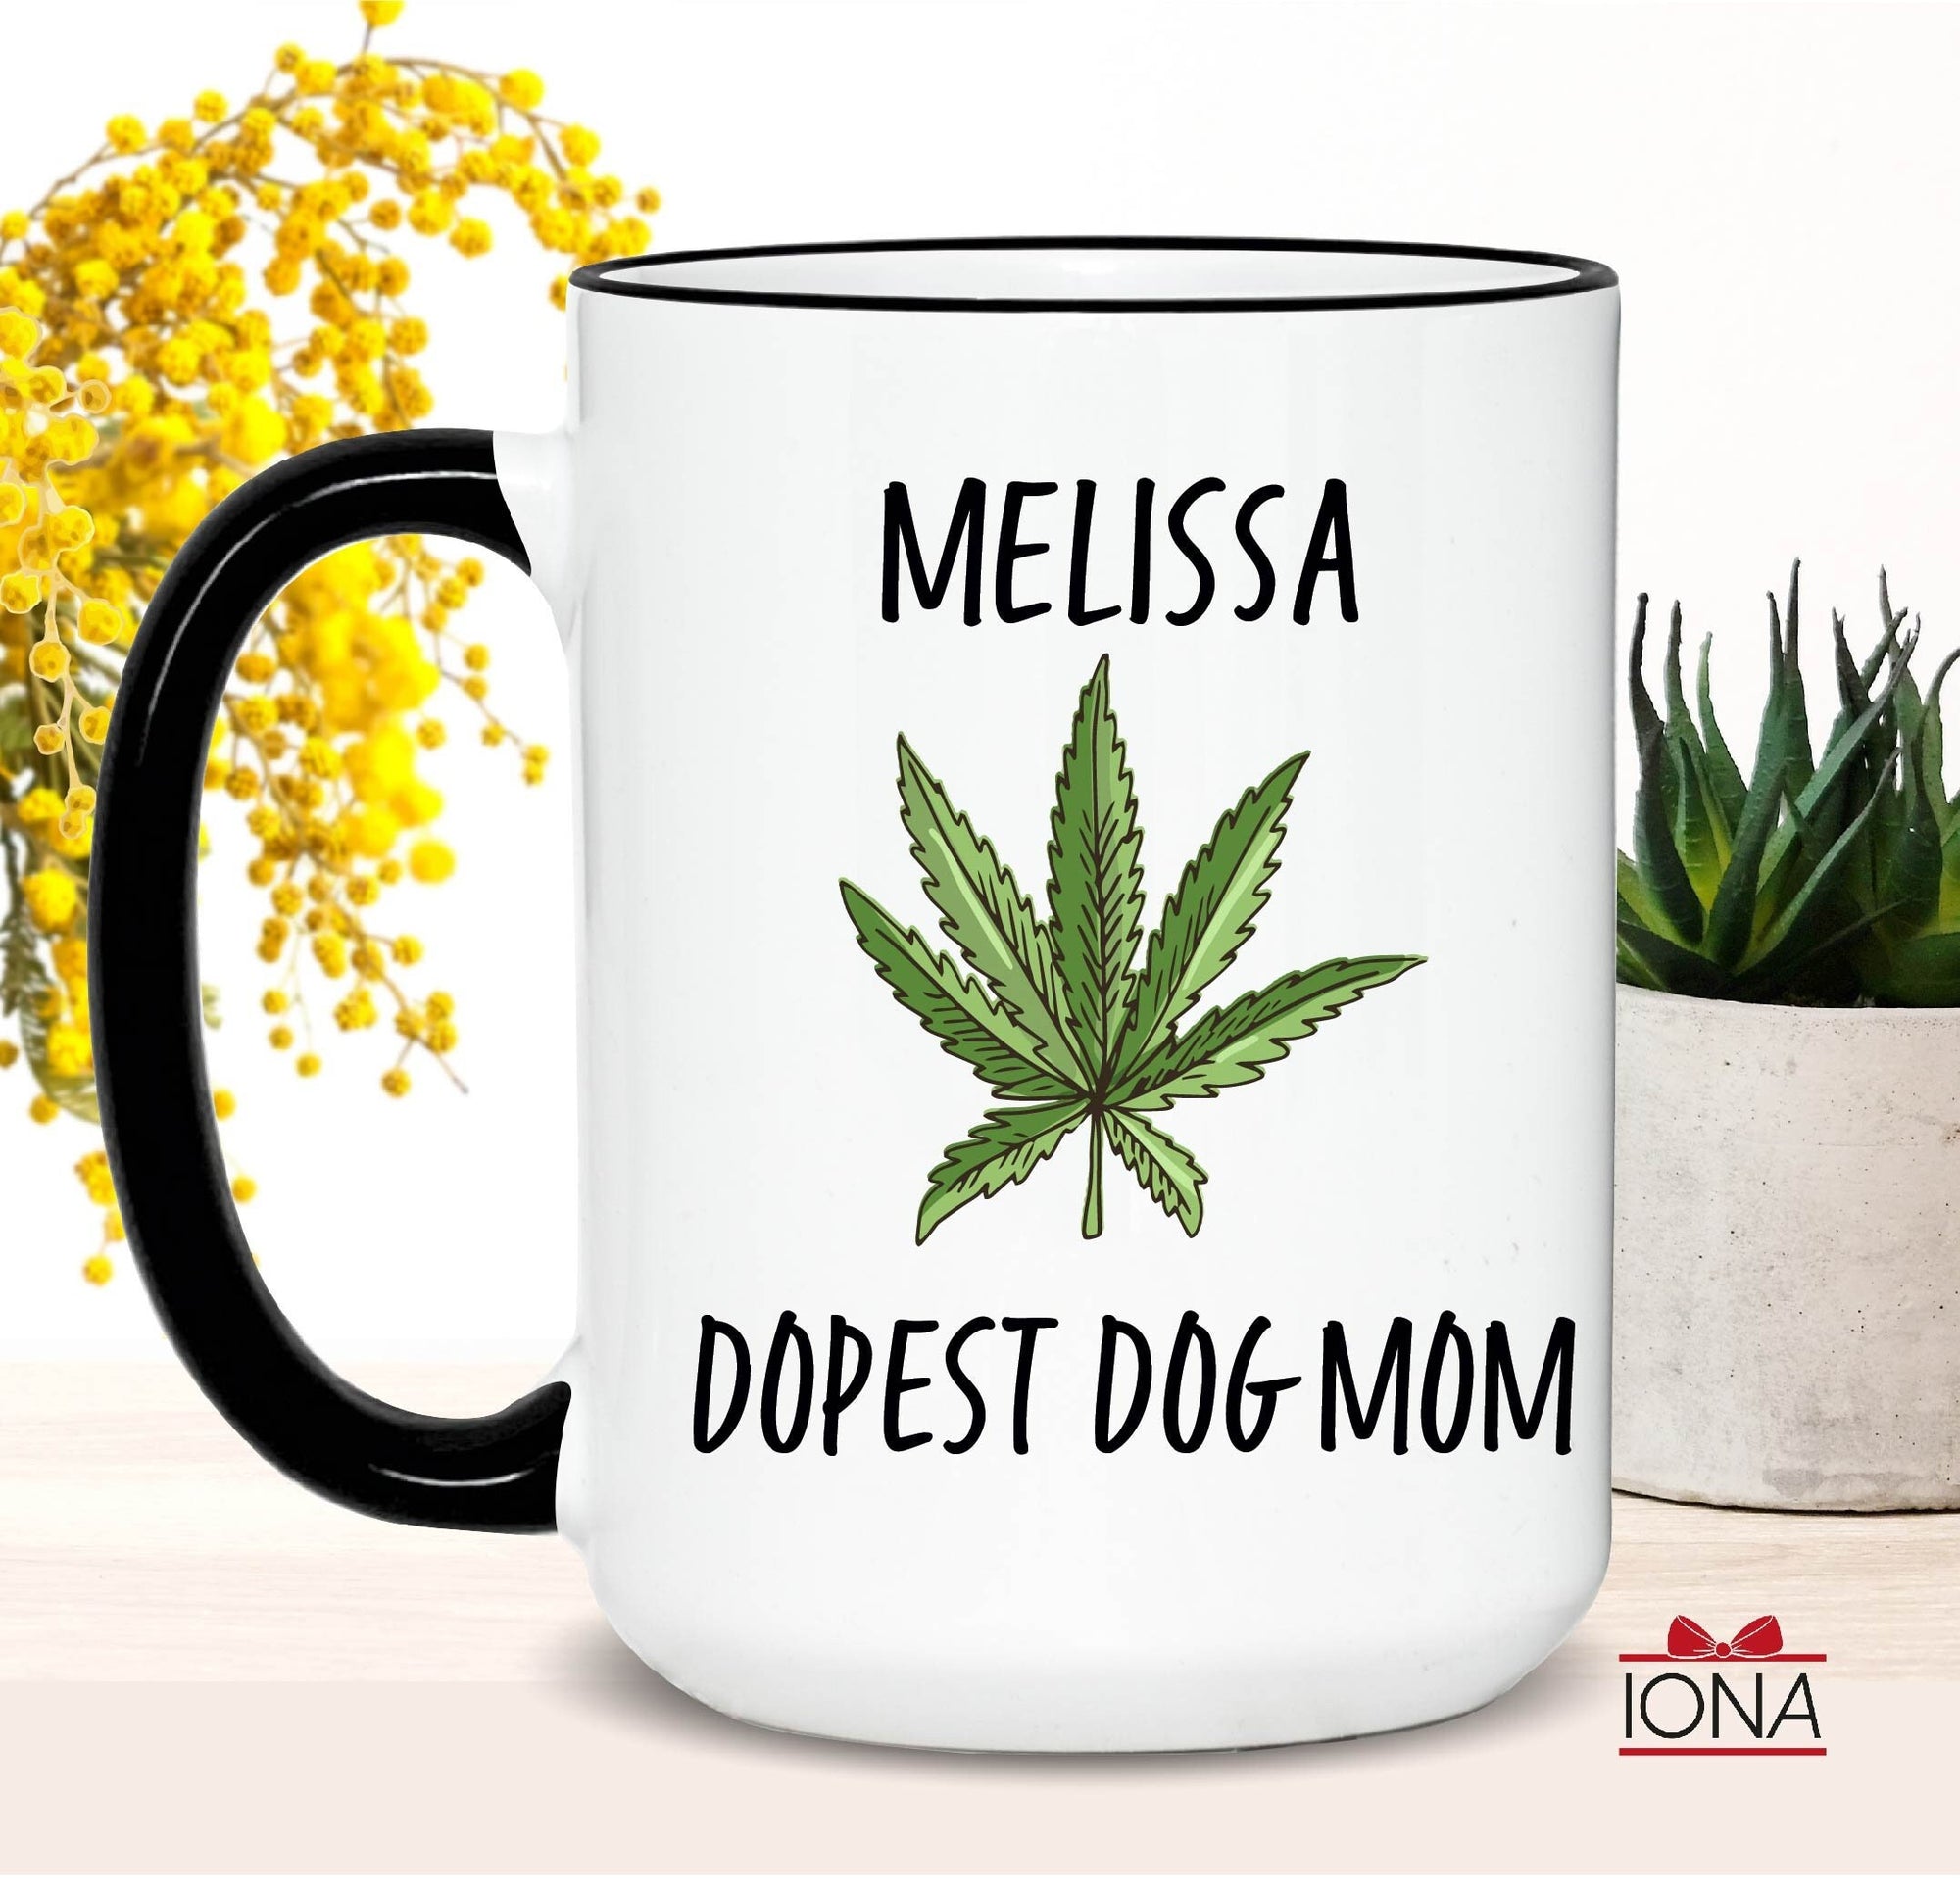 Dopest Dog Mom Coffee Mug, Personalized Dog Mom Birthday Gift, Funny Birthday Gift for Dog Mom, Dog Mom Tea Cup, Best Fucking Dog Mother